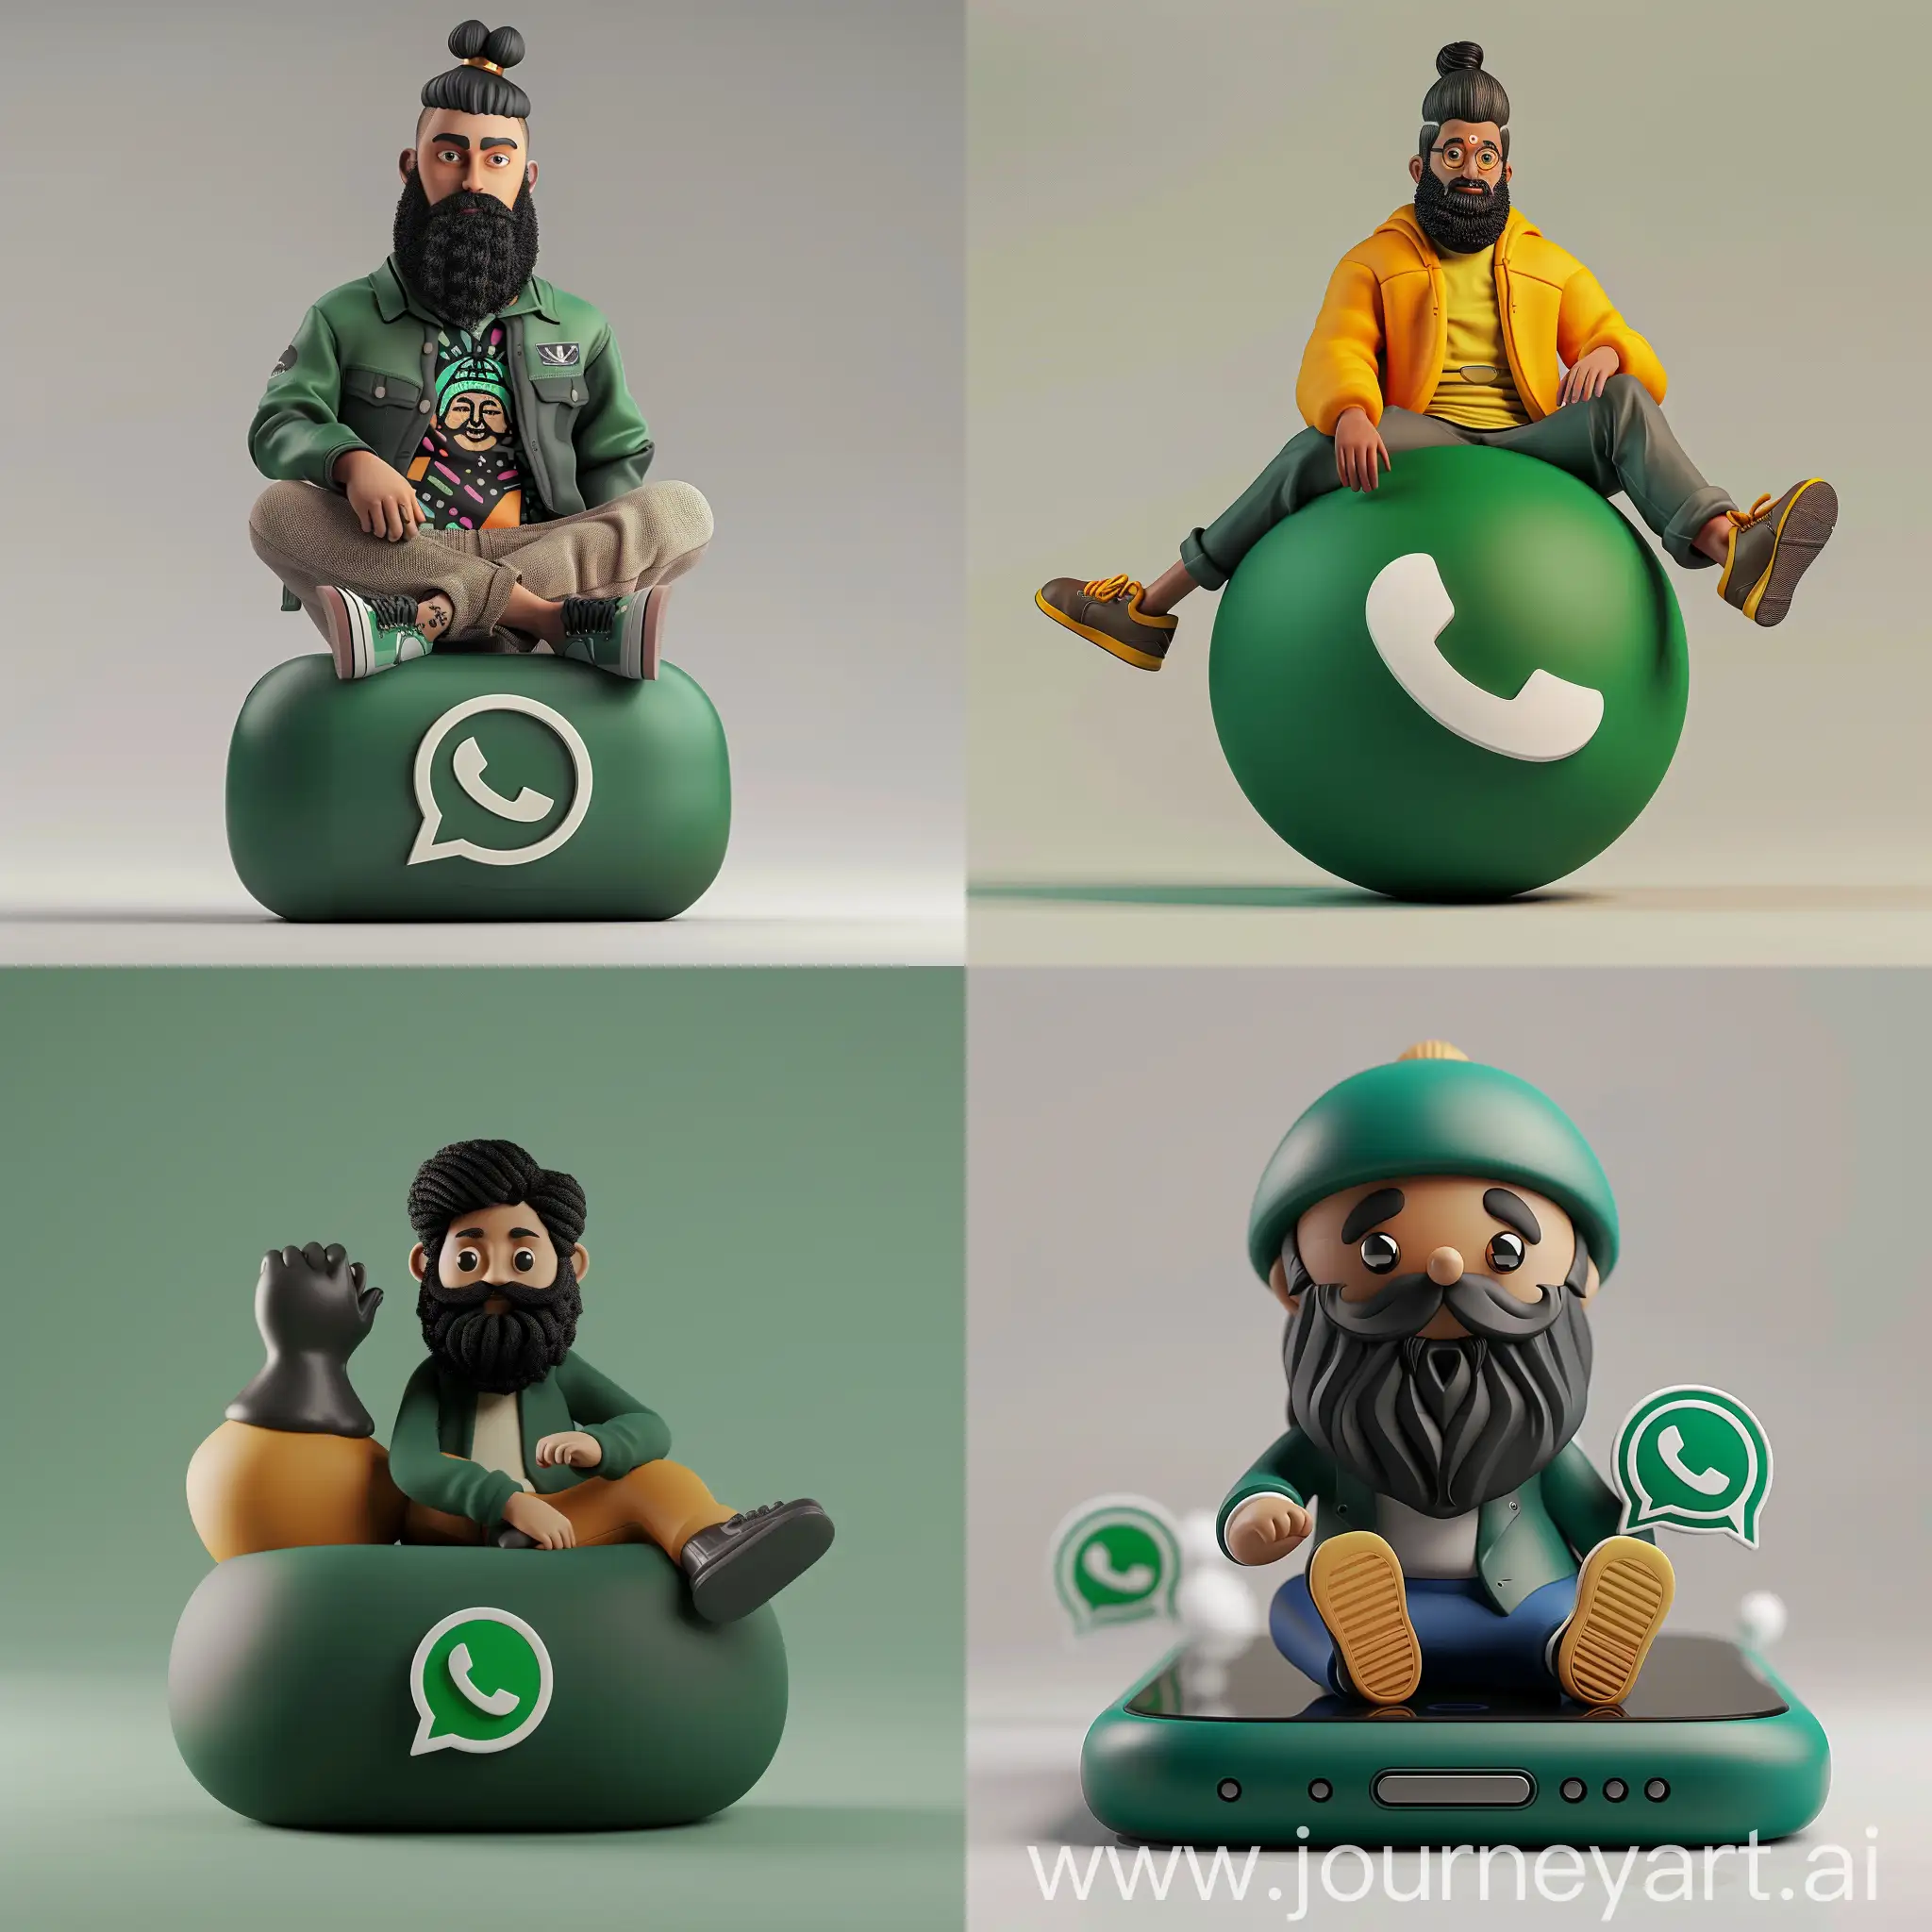 Modern-Indian-Man-Sitting-on-WhatsApp-Logo-in-Profile-Mockup